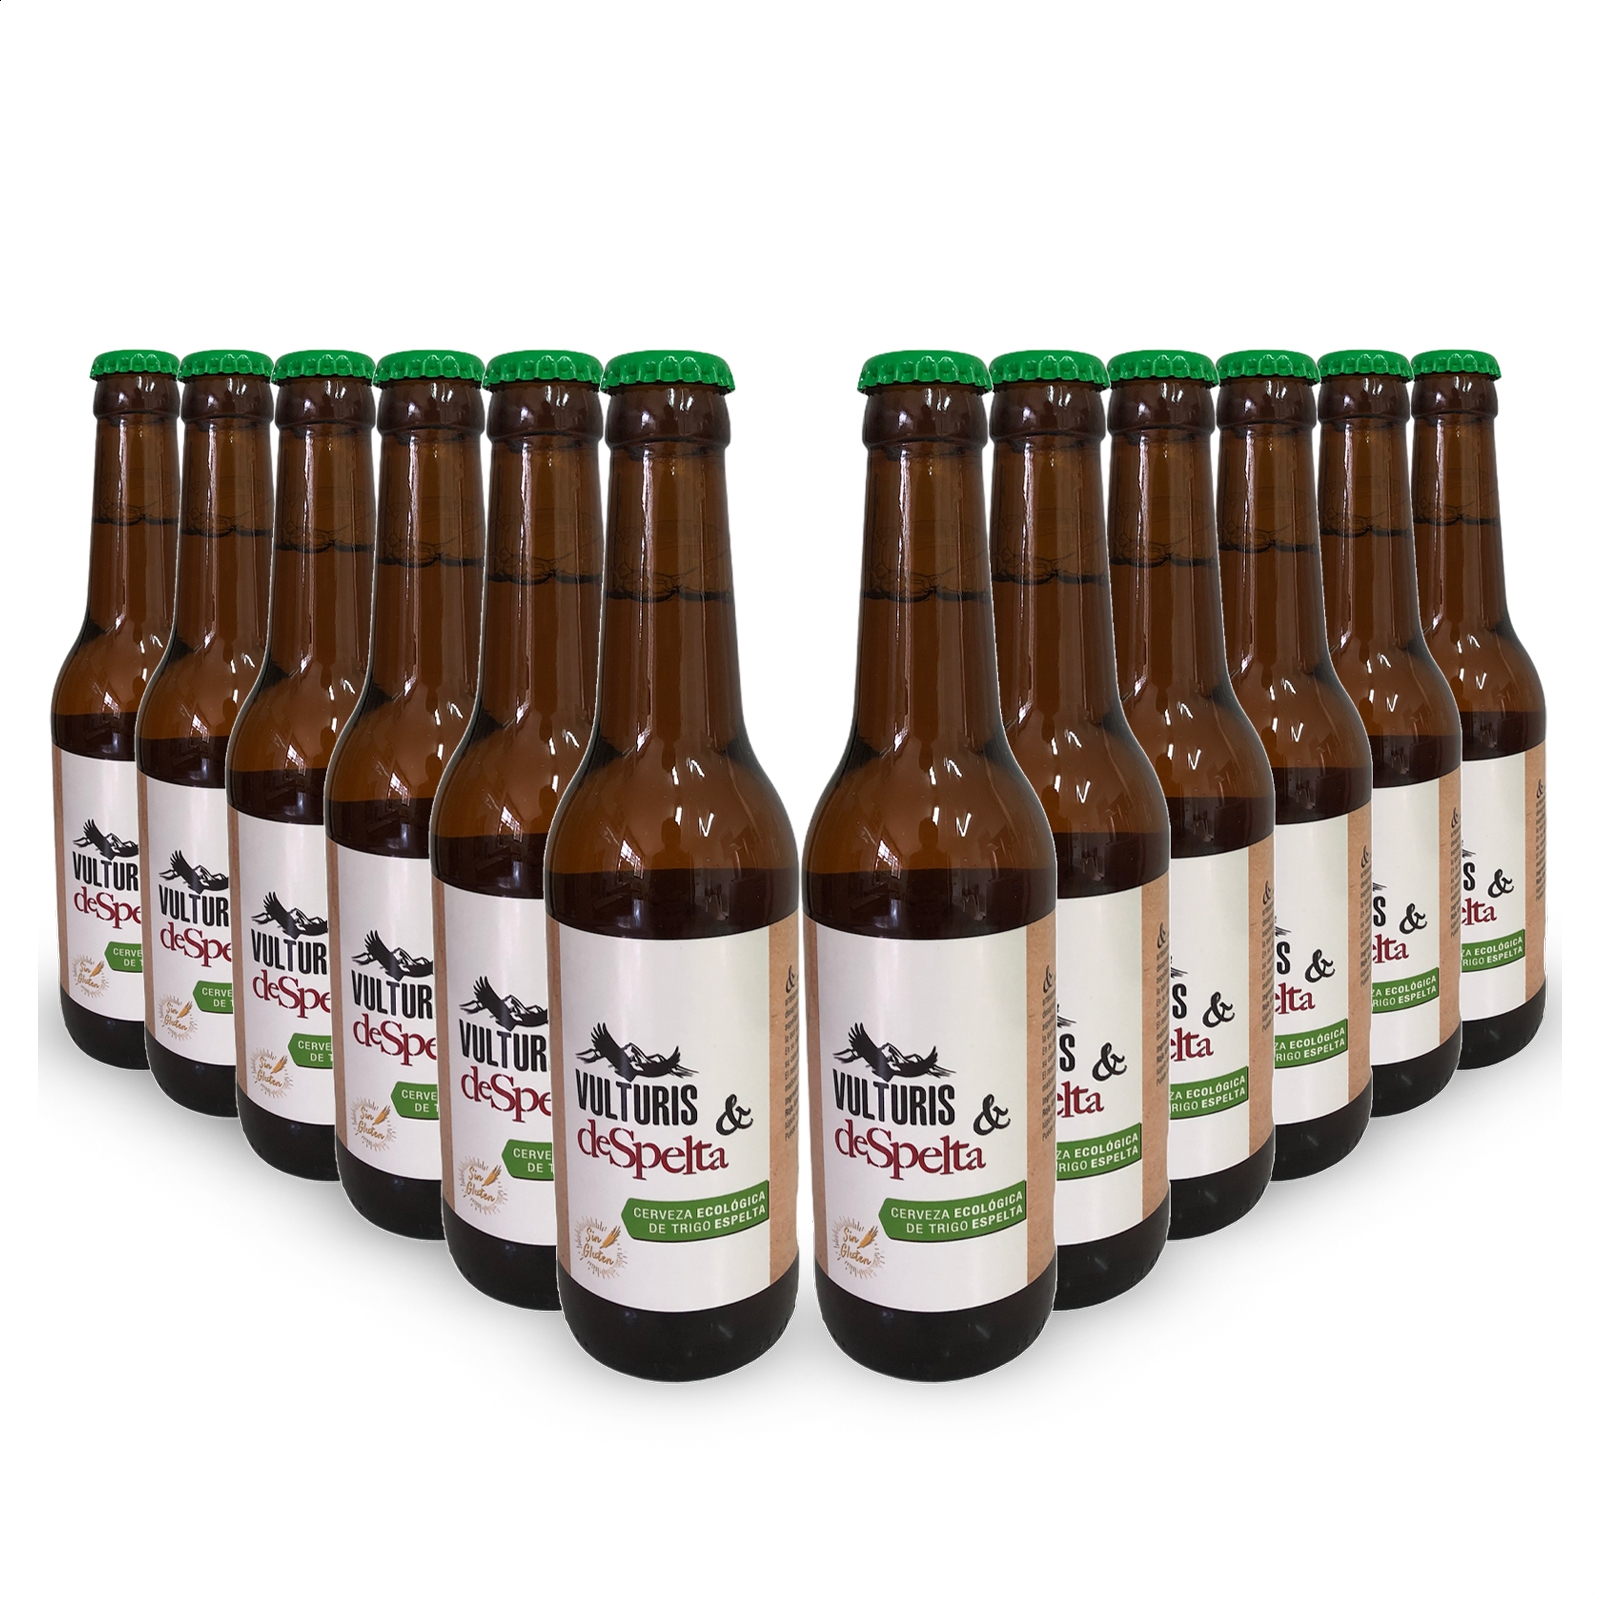 Despelta-Vulturis - Cerveza artesanal de espelta ecológica 330ml, 12uds